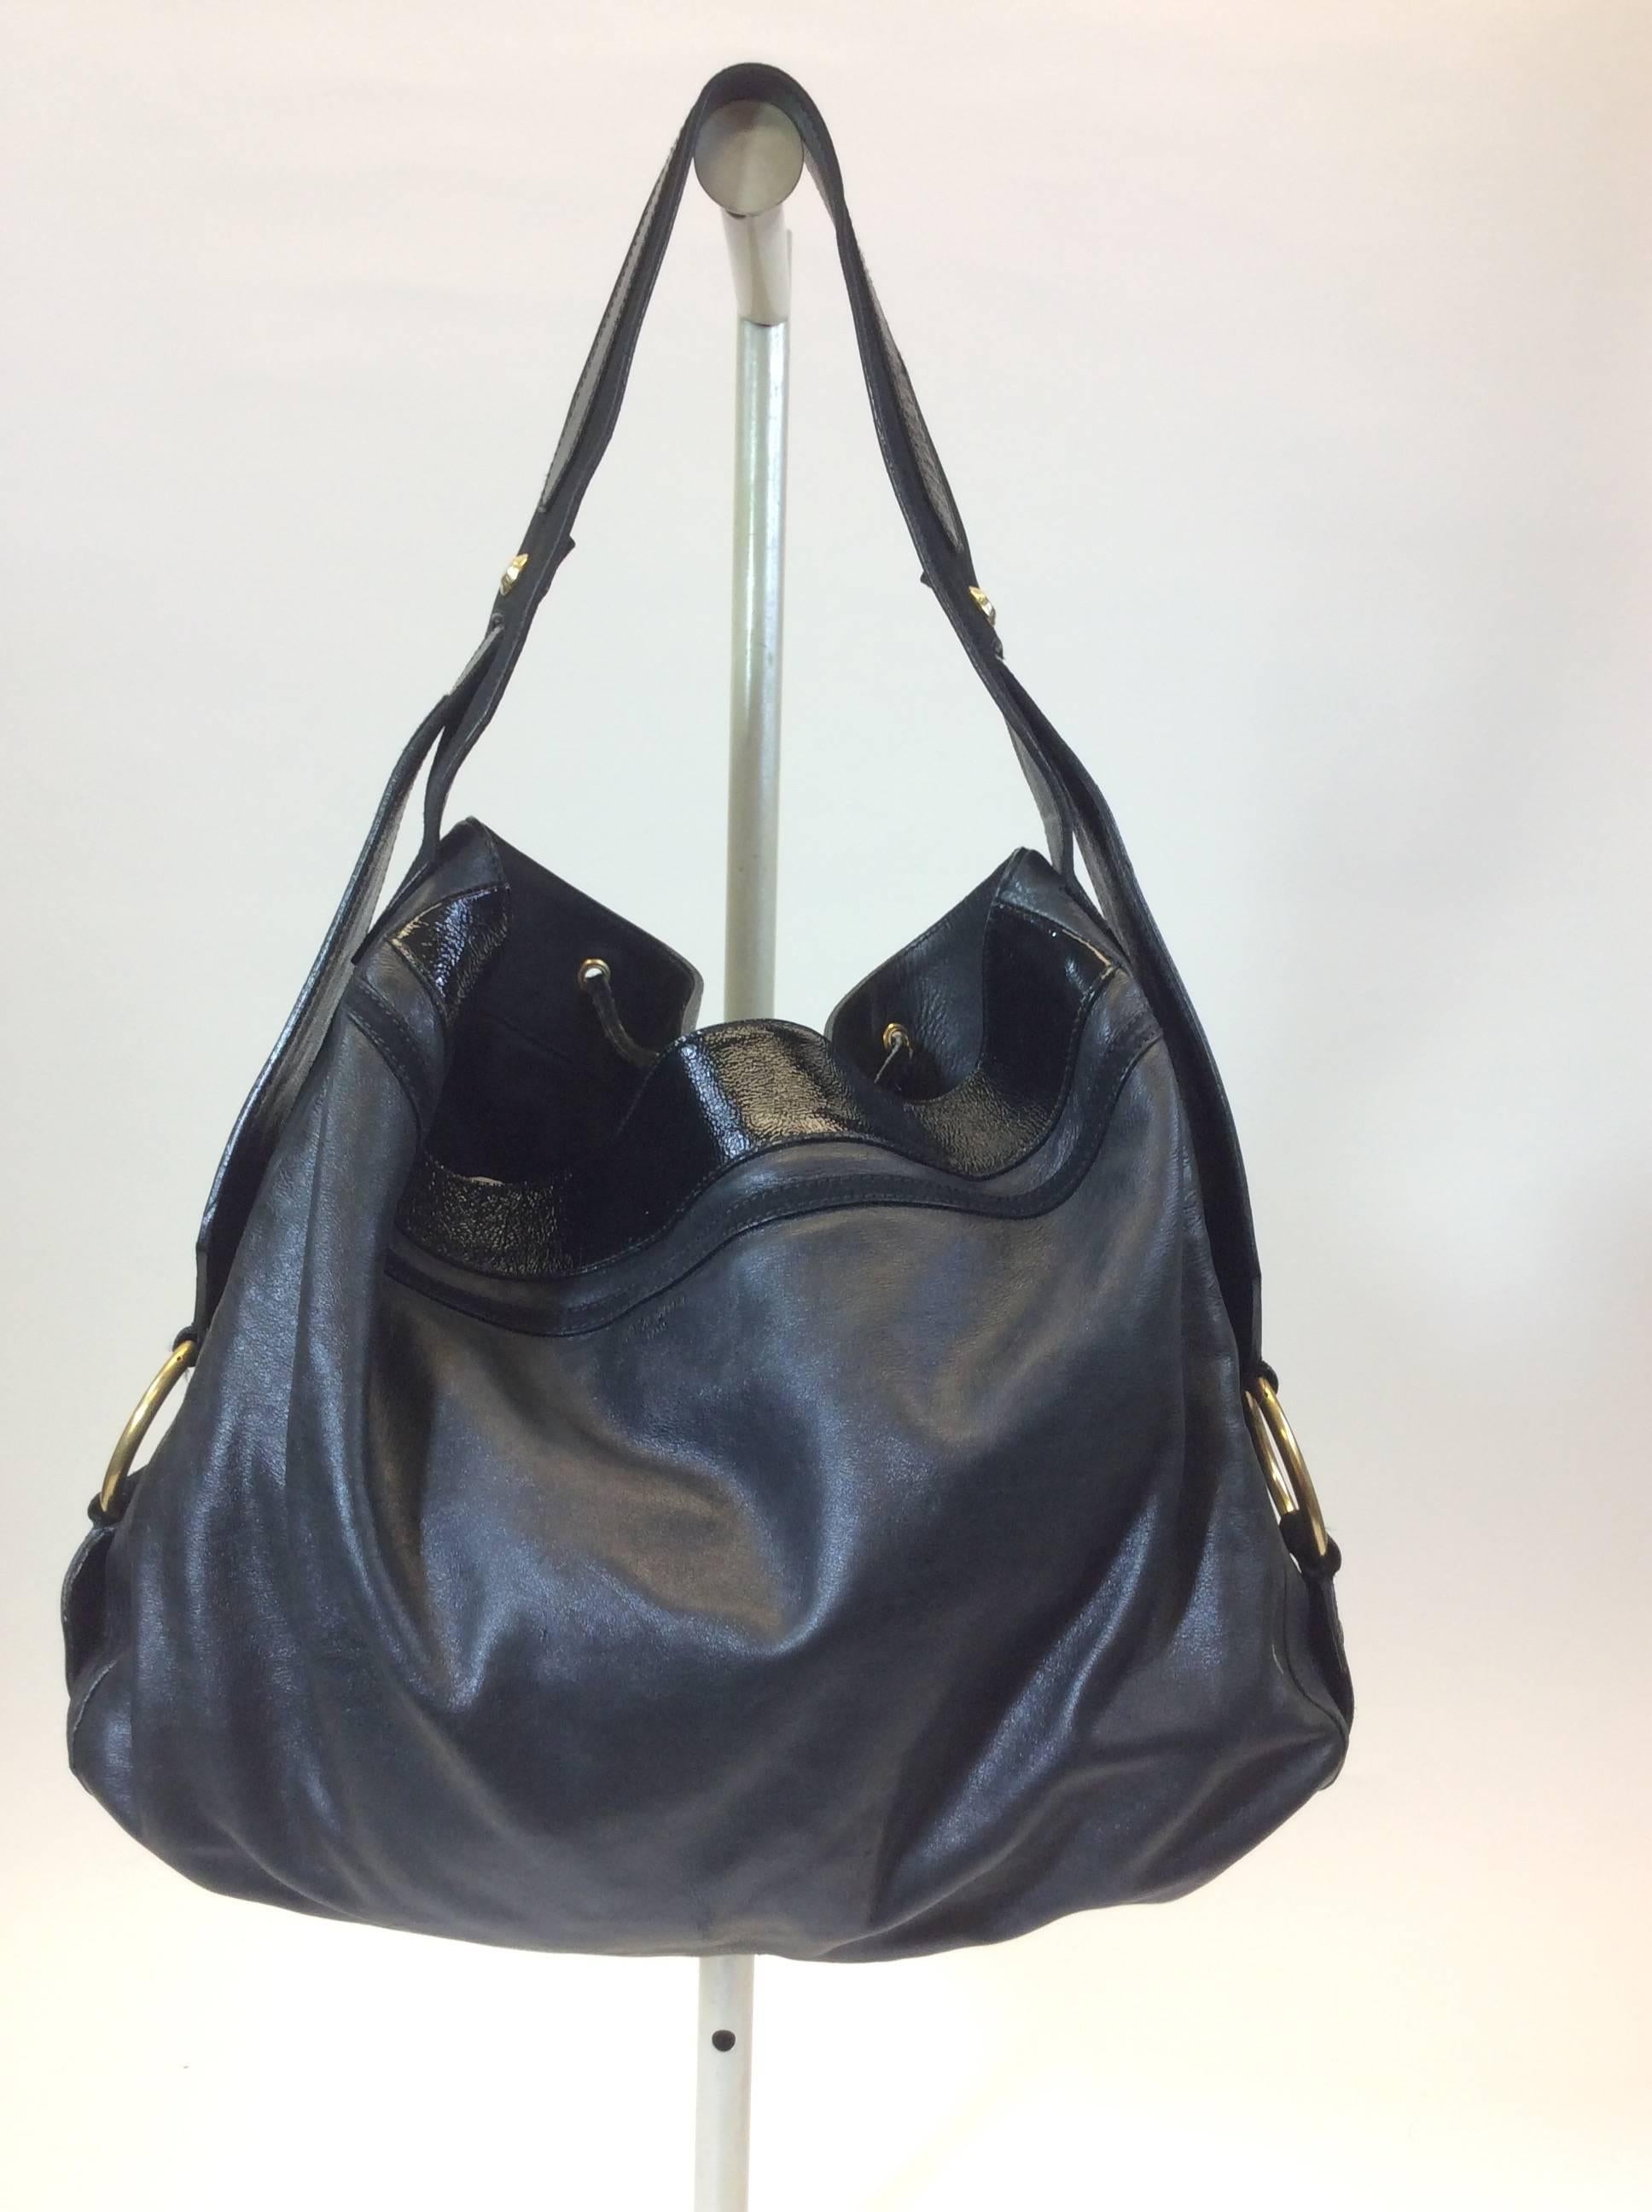 Women's Yves Saint Laurent Black Leather and Suede Handbag